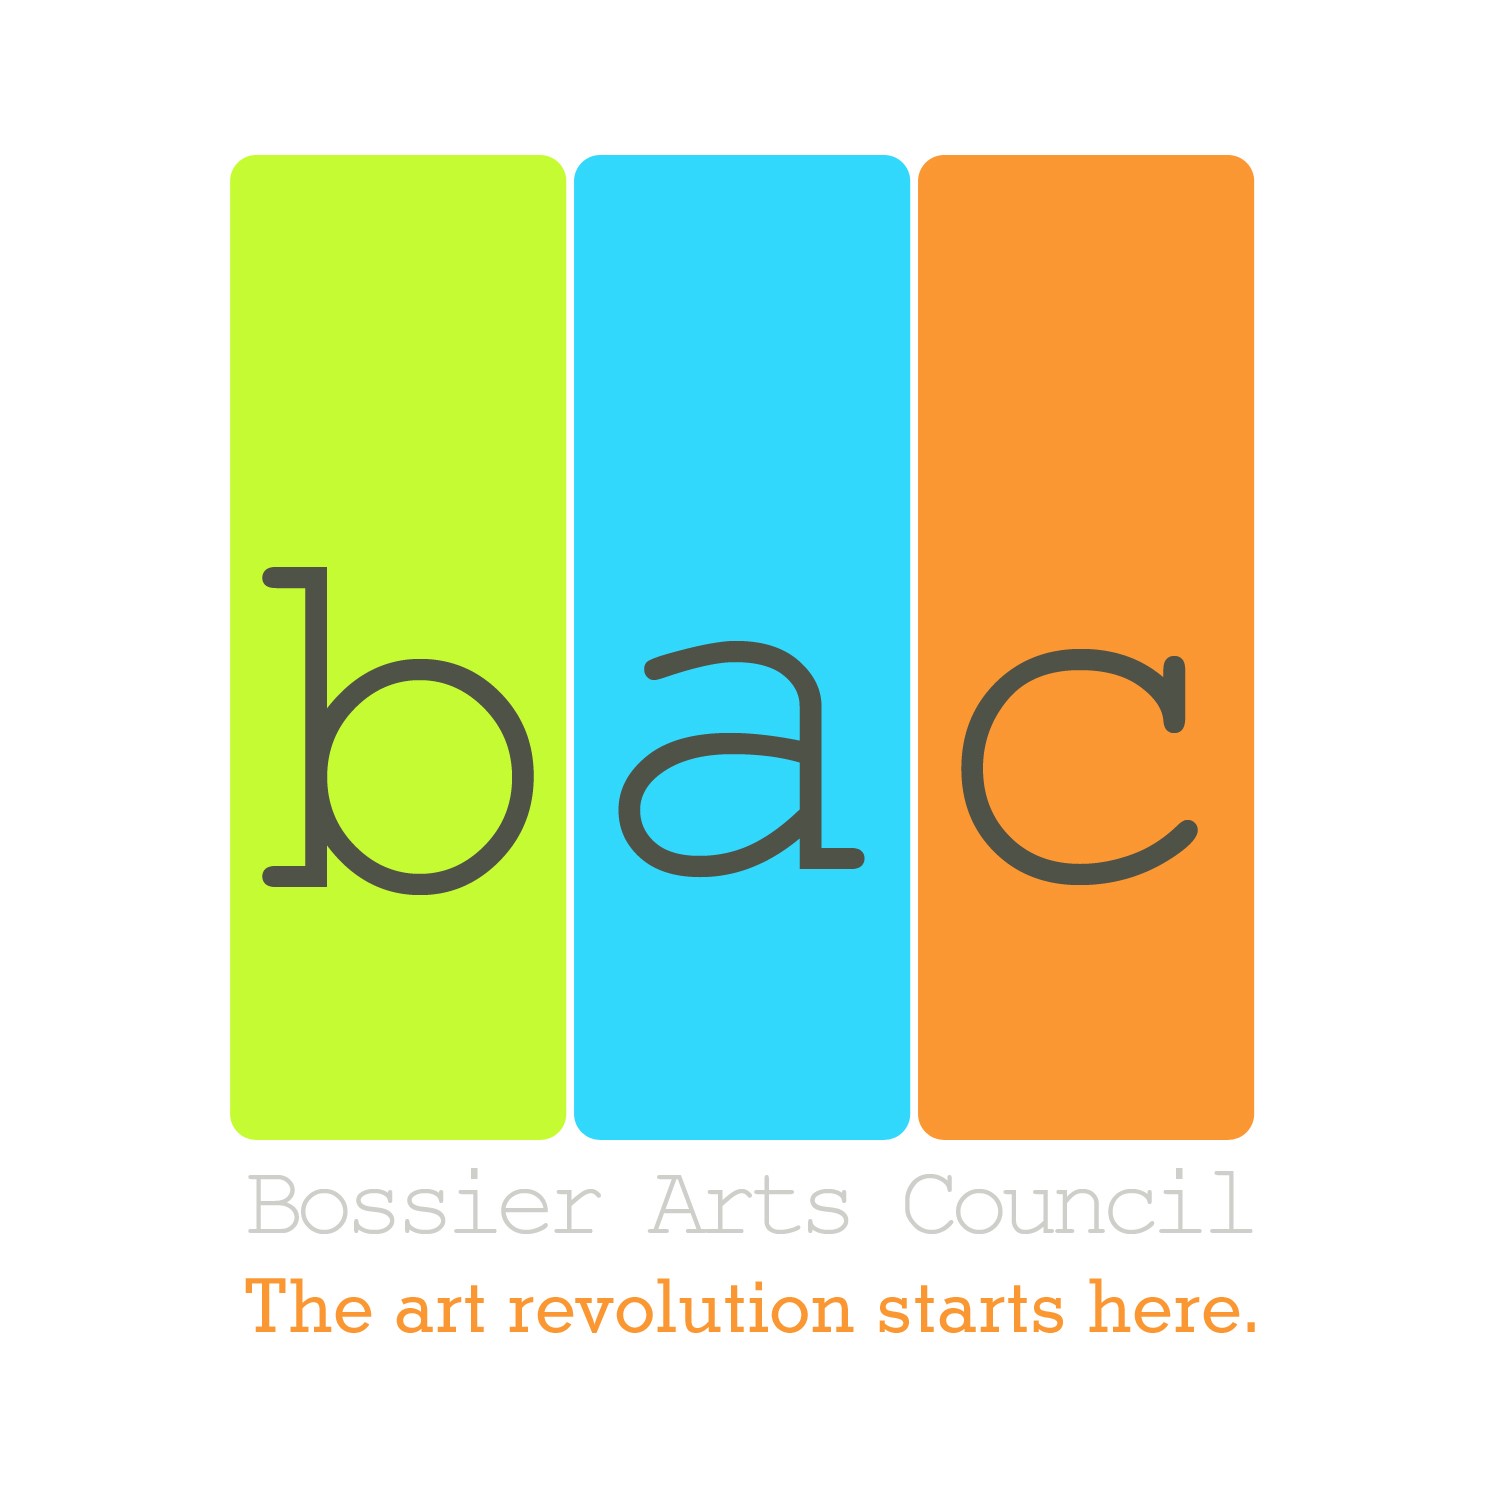 Bossier Arts Council